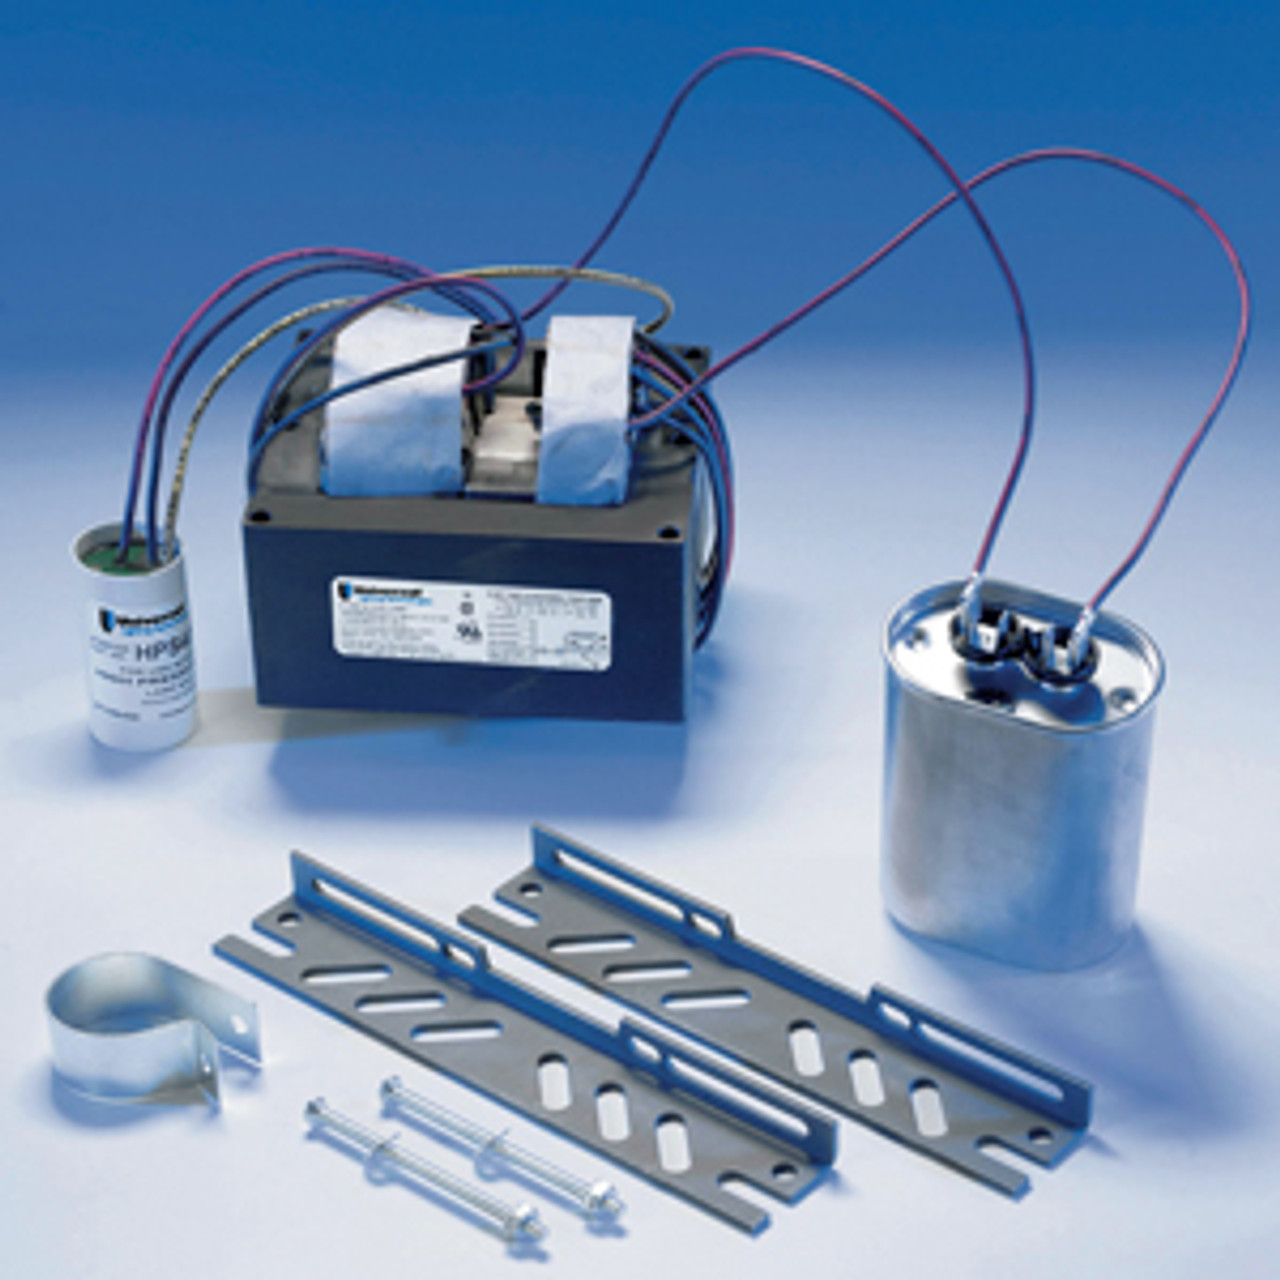 Details about   Magnetek Igniter For High Pressure Sodium Lamp Ballast HPS-150-3A 